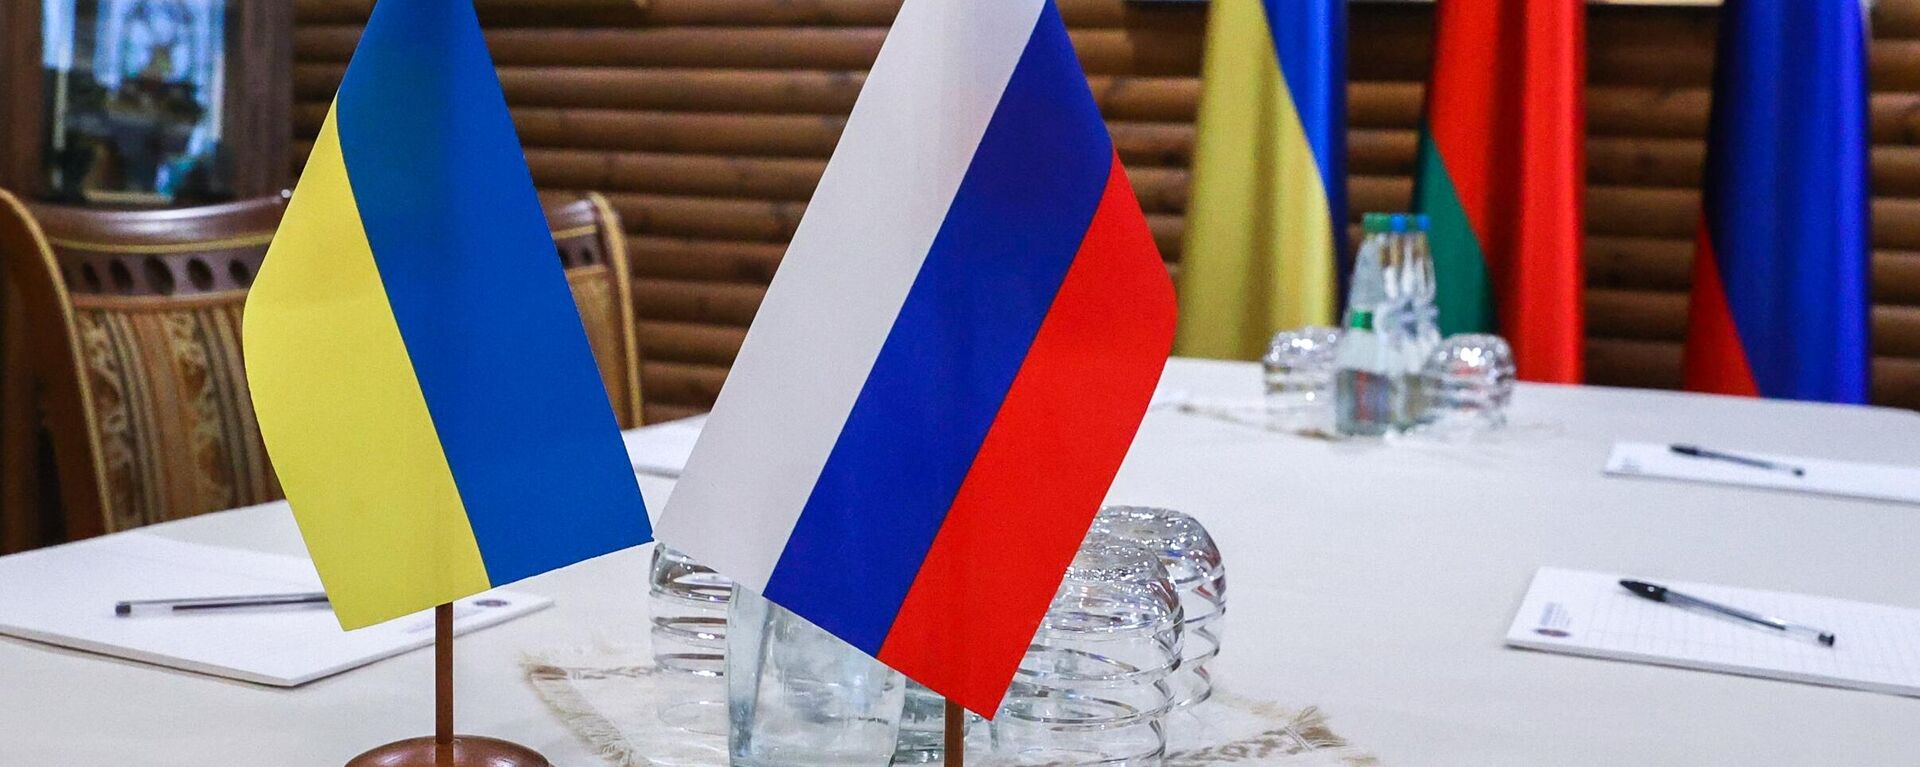 In this handout photo released by BelTA, flags are seen on a table before Russian-Ukrainian talks, in Belarus - Sputnik International, 1920, 14.03.2022